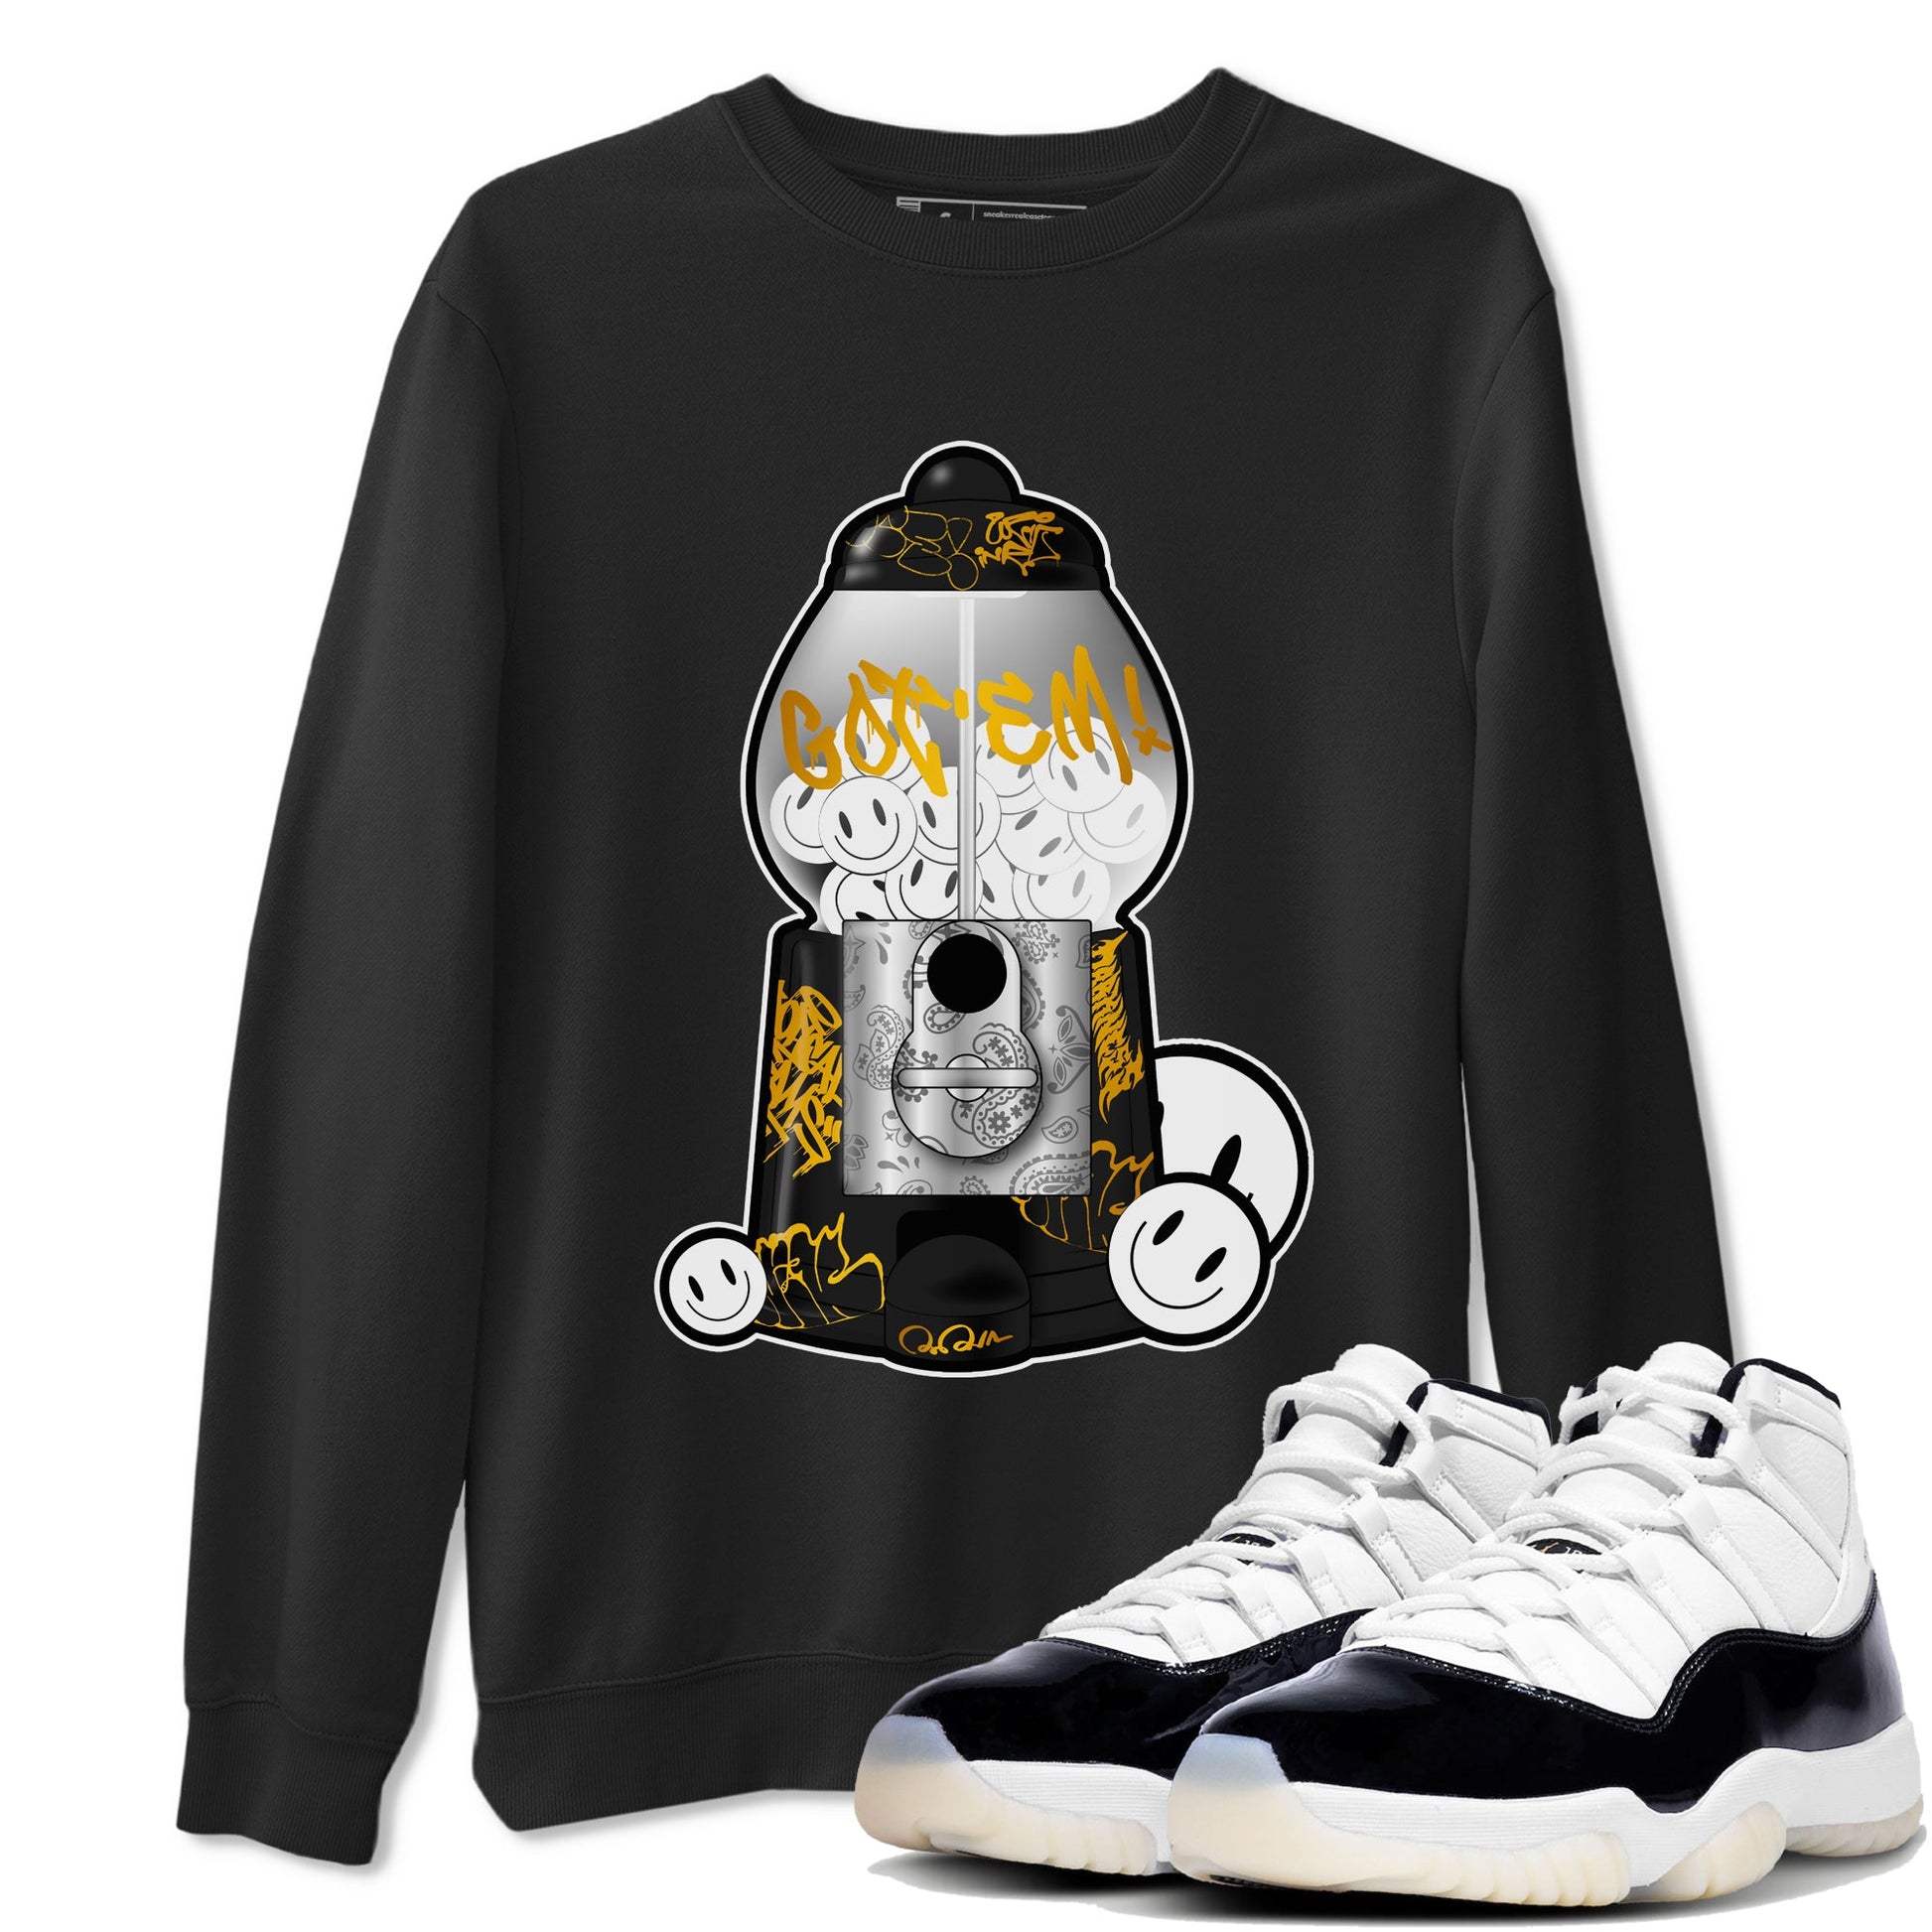 11s Gratitude shirt to match jordans Gumball Machine sneaker tees Air Jordan 11 Gratitude SNRT Sneaker Release Tees Unisex Black 1 T-Shirt